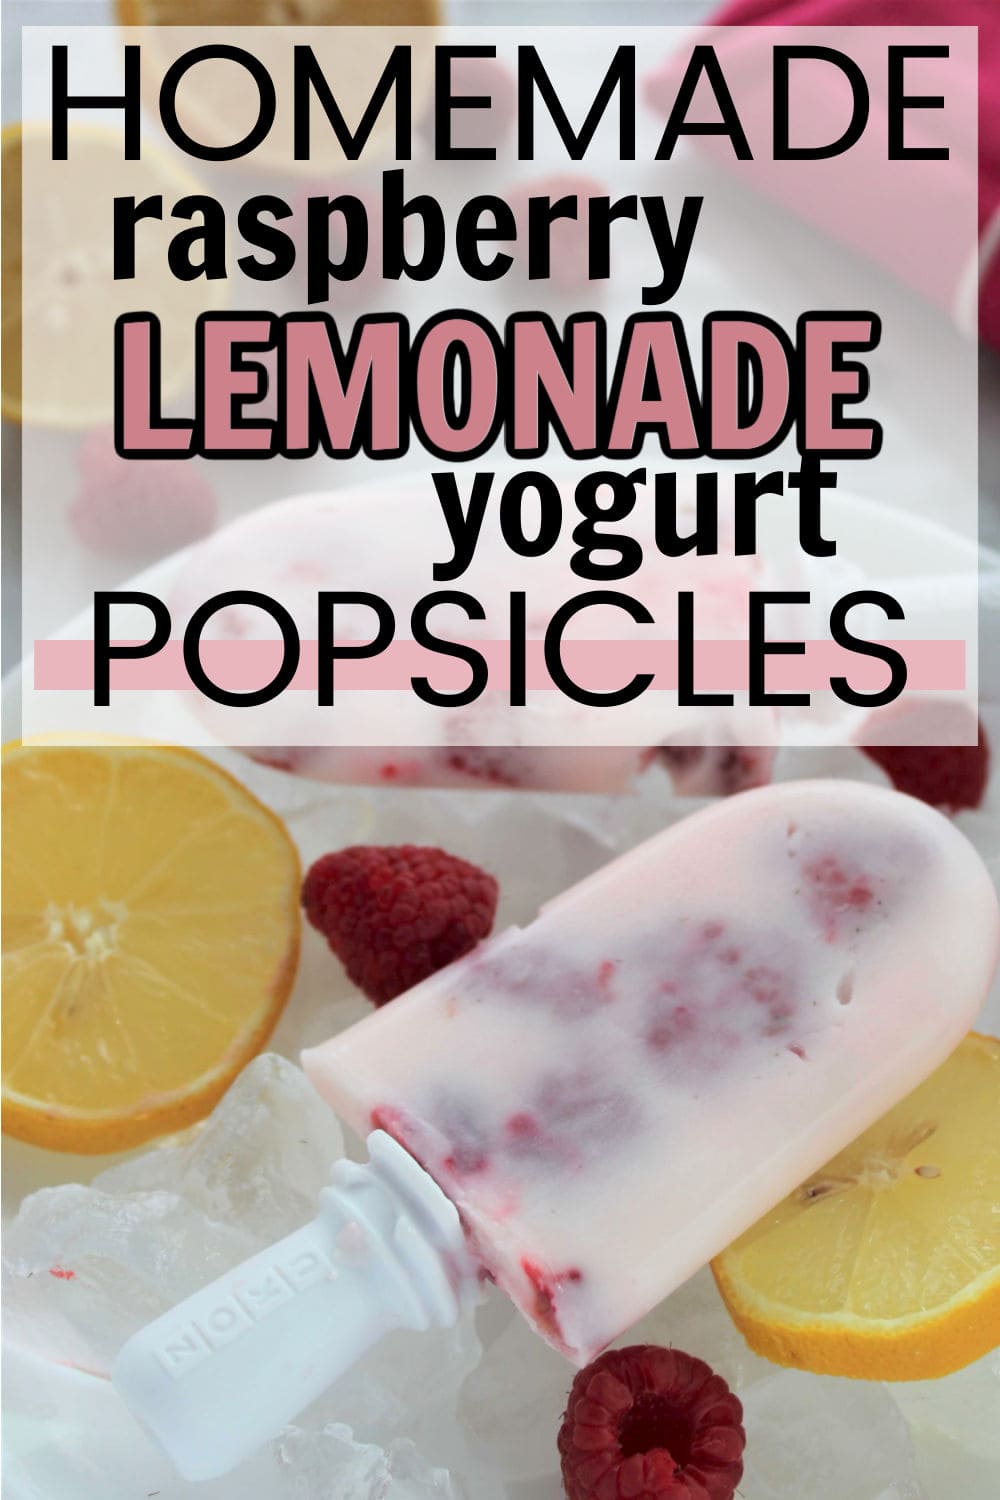 homemade raspberry lemonade yogurt popsicles on ice next to a lemon and raspberries (with text overlay).